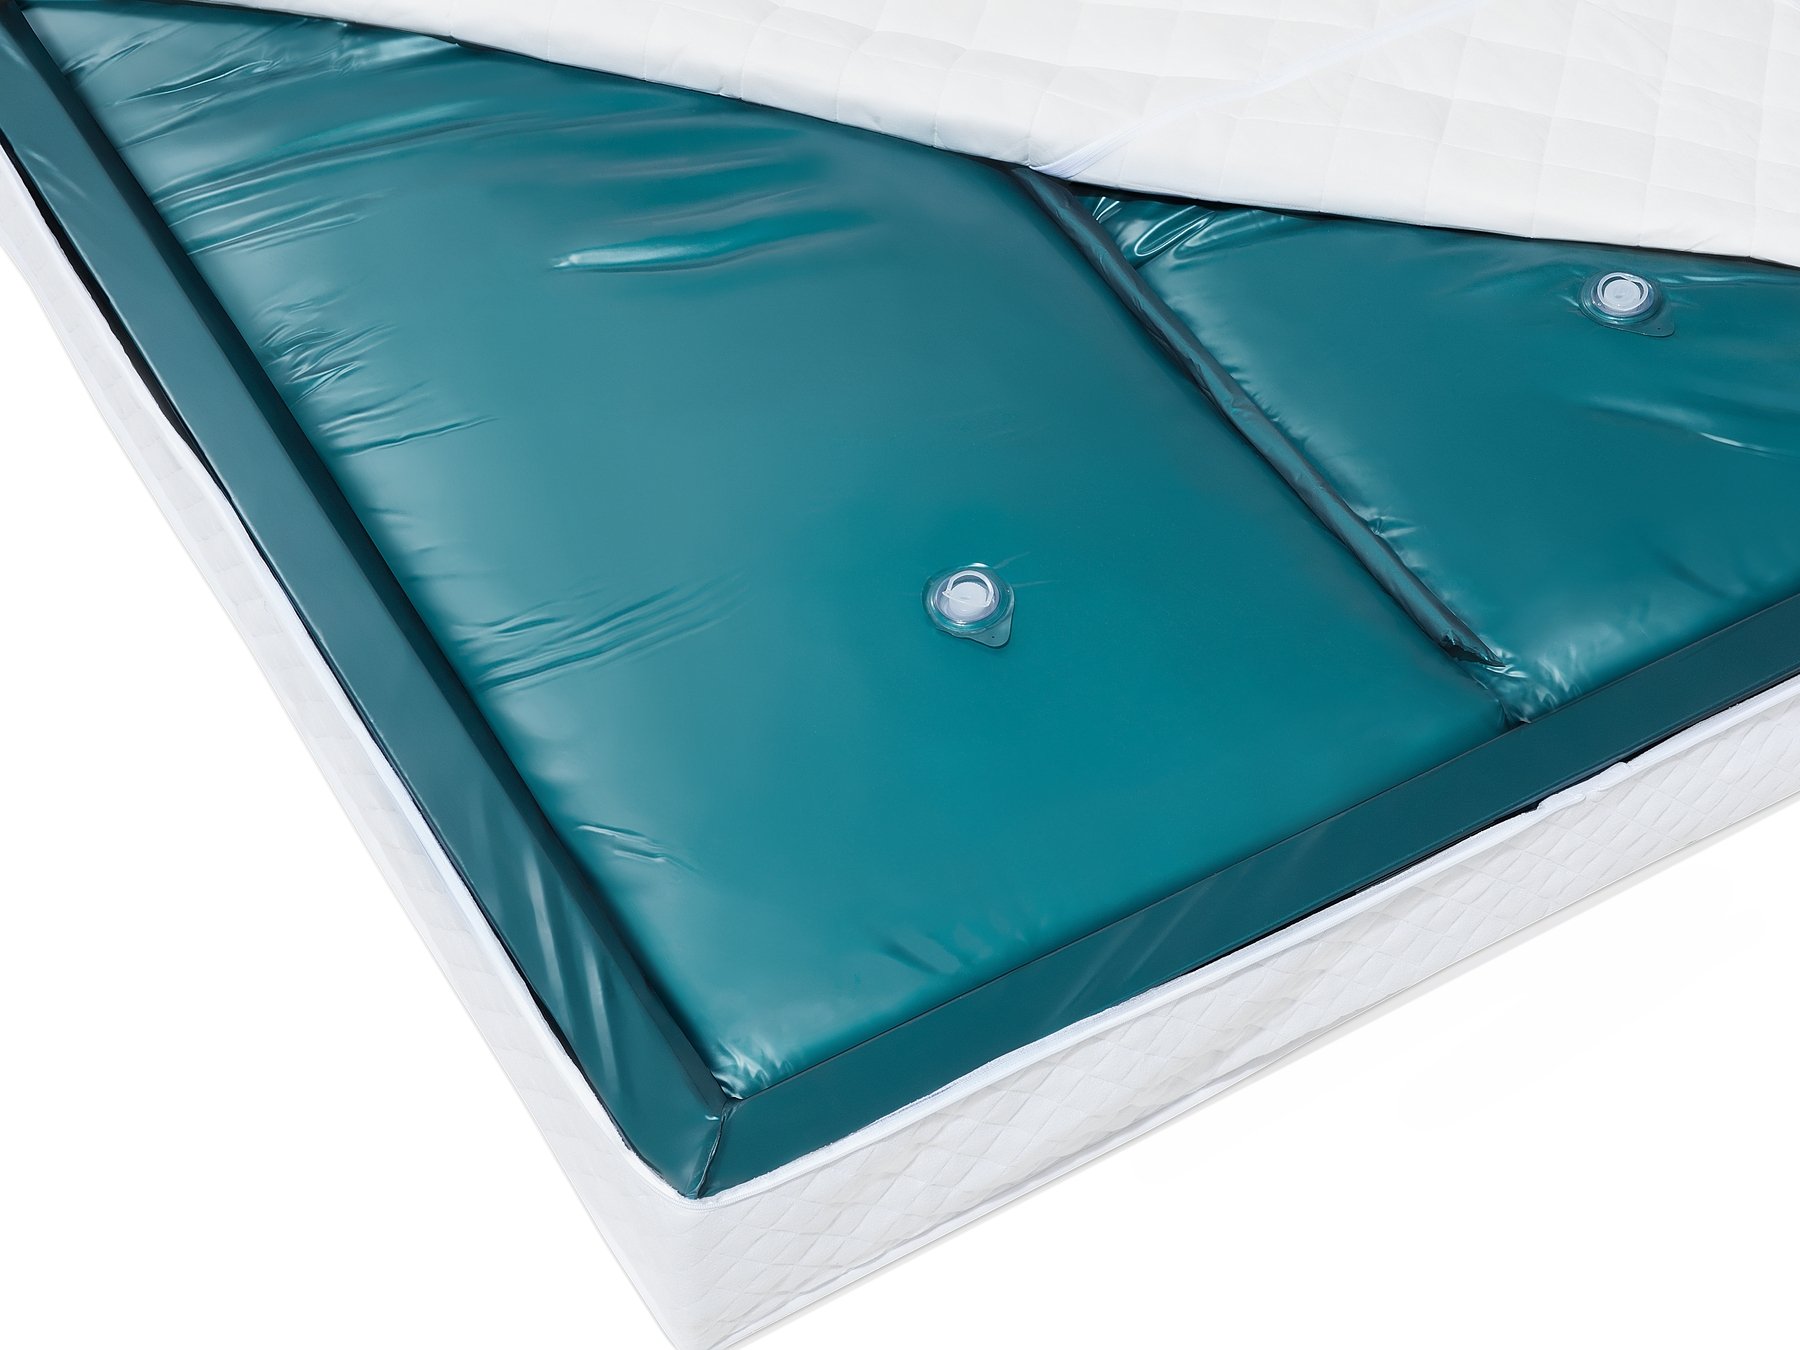 waterbed mattress protectors uk